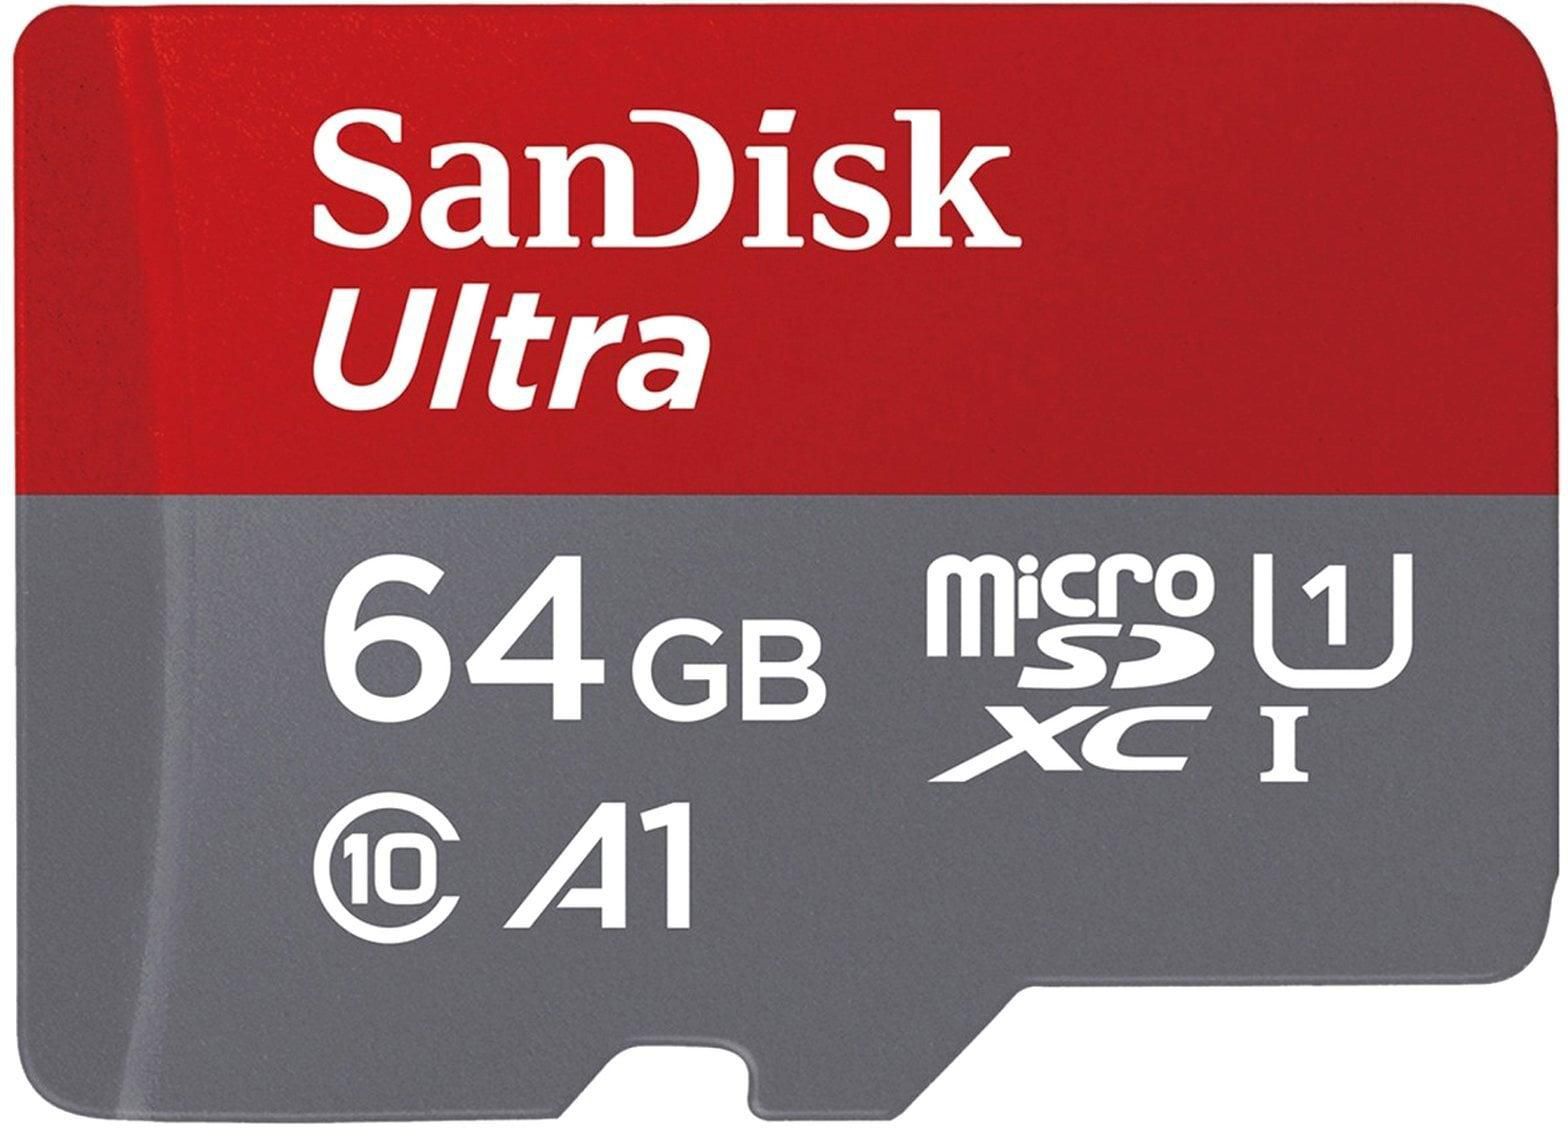 Sandisk Ultra Class 10 MicroSDXC-I Memory Card 64GB Multicolour